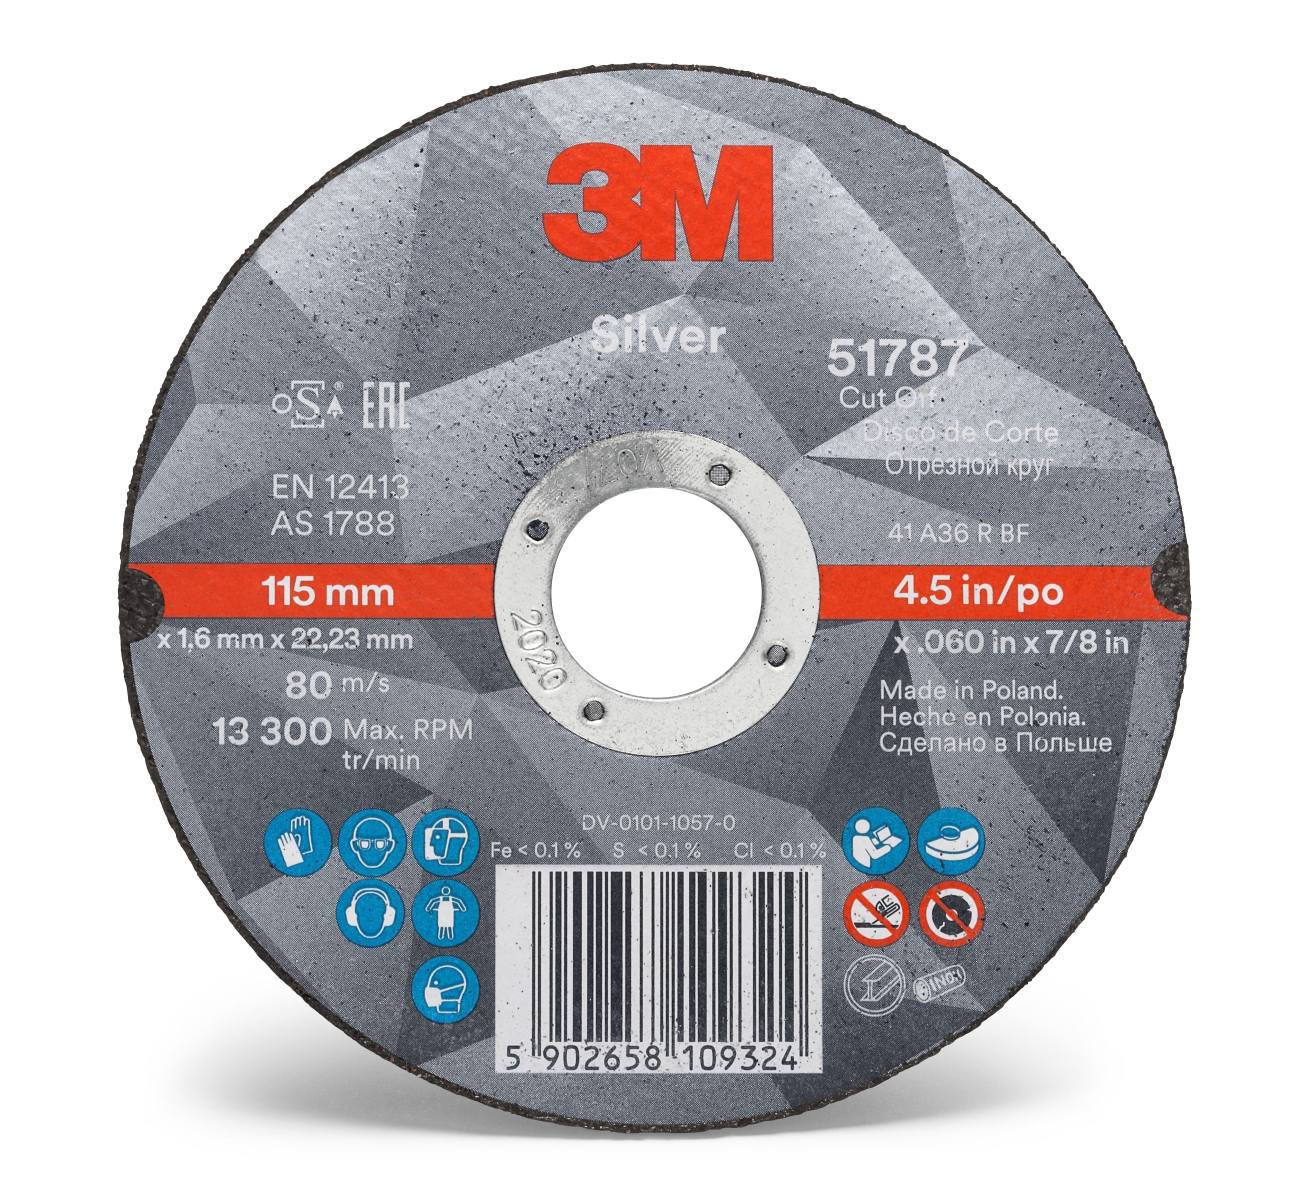 3M Silver Cut-Off Wheel cutting disc, 180 mm, 2.5 mm, 22.23 mm, T42, 51802